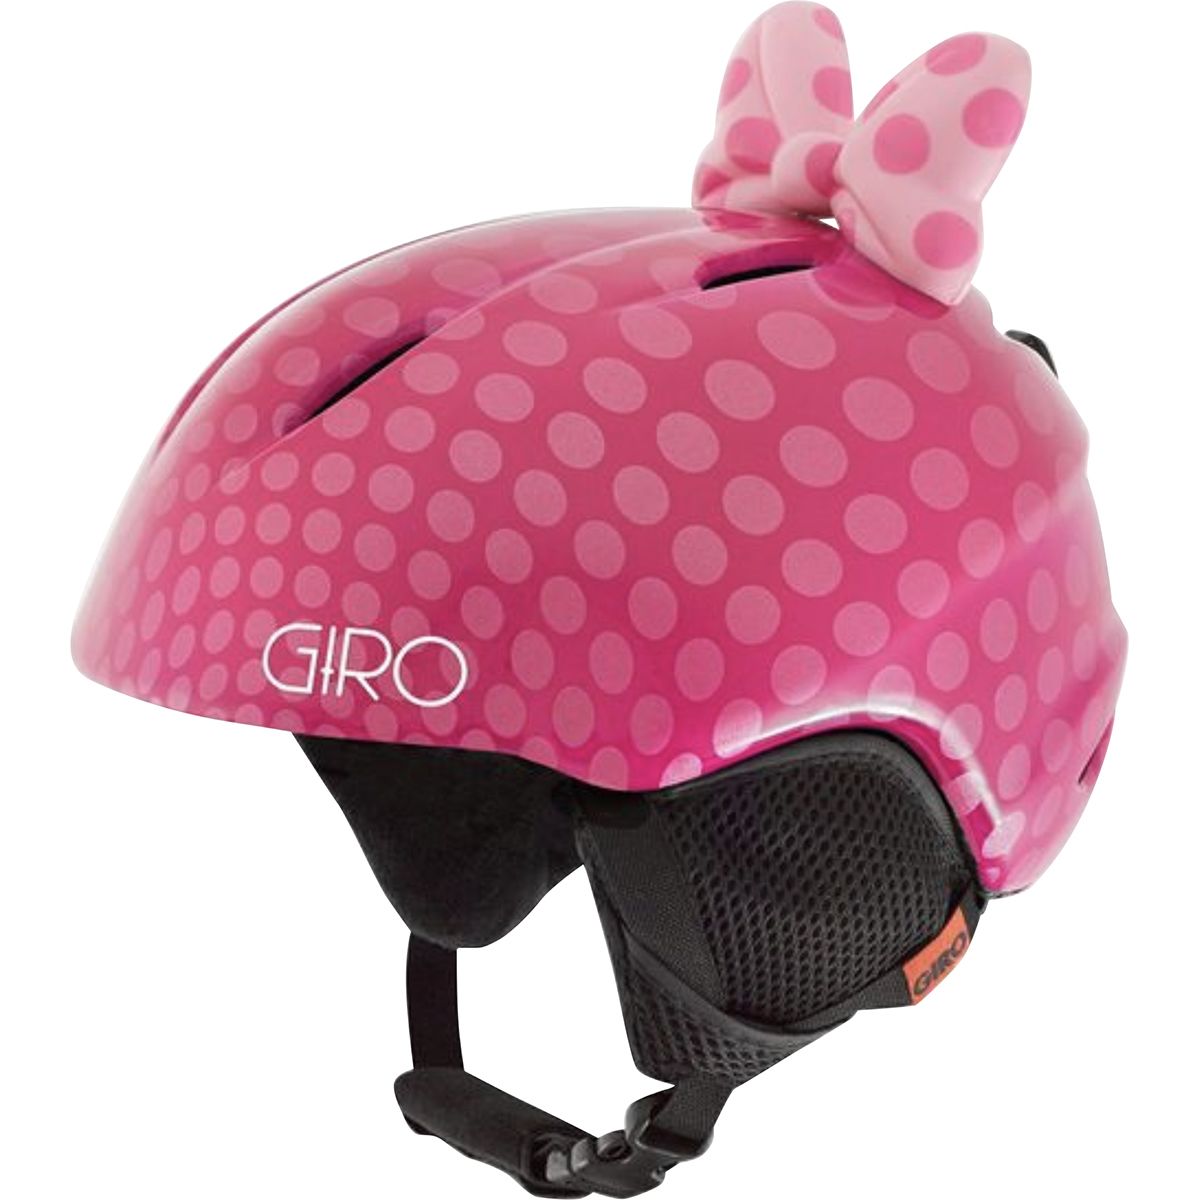 Giro Launch Plus Helmet - Kids' Pink Bow Polka Dots